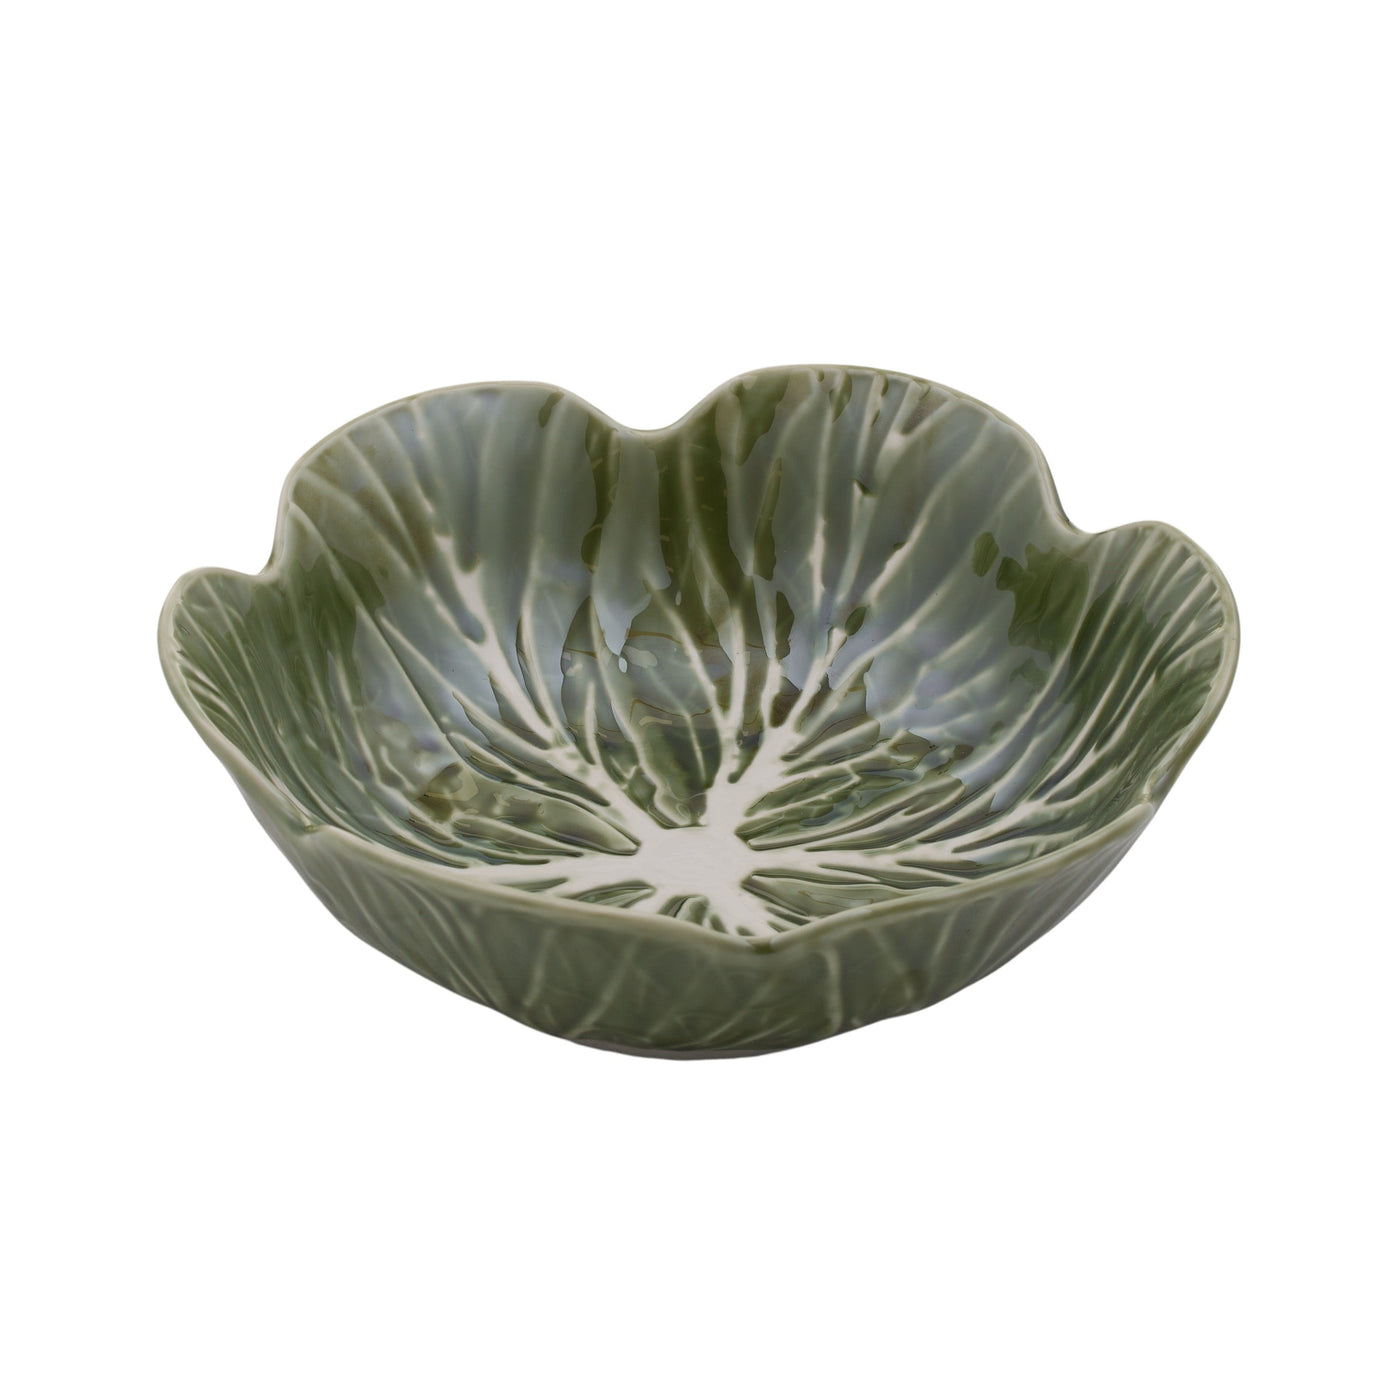 Cabbage Ceramic Bowl - Large